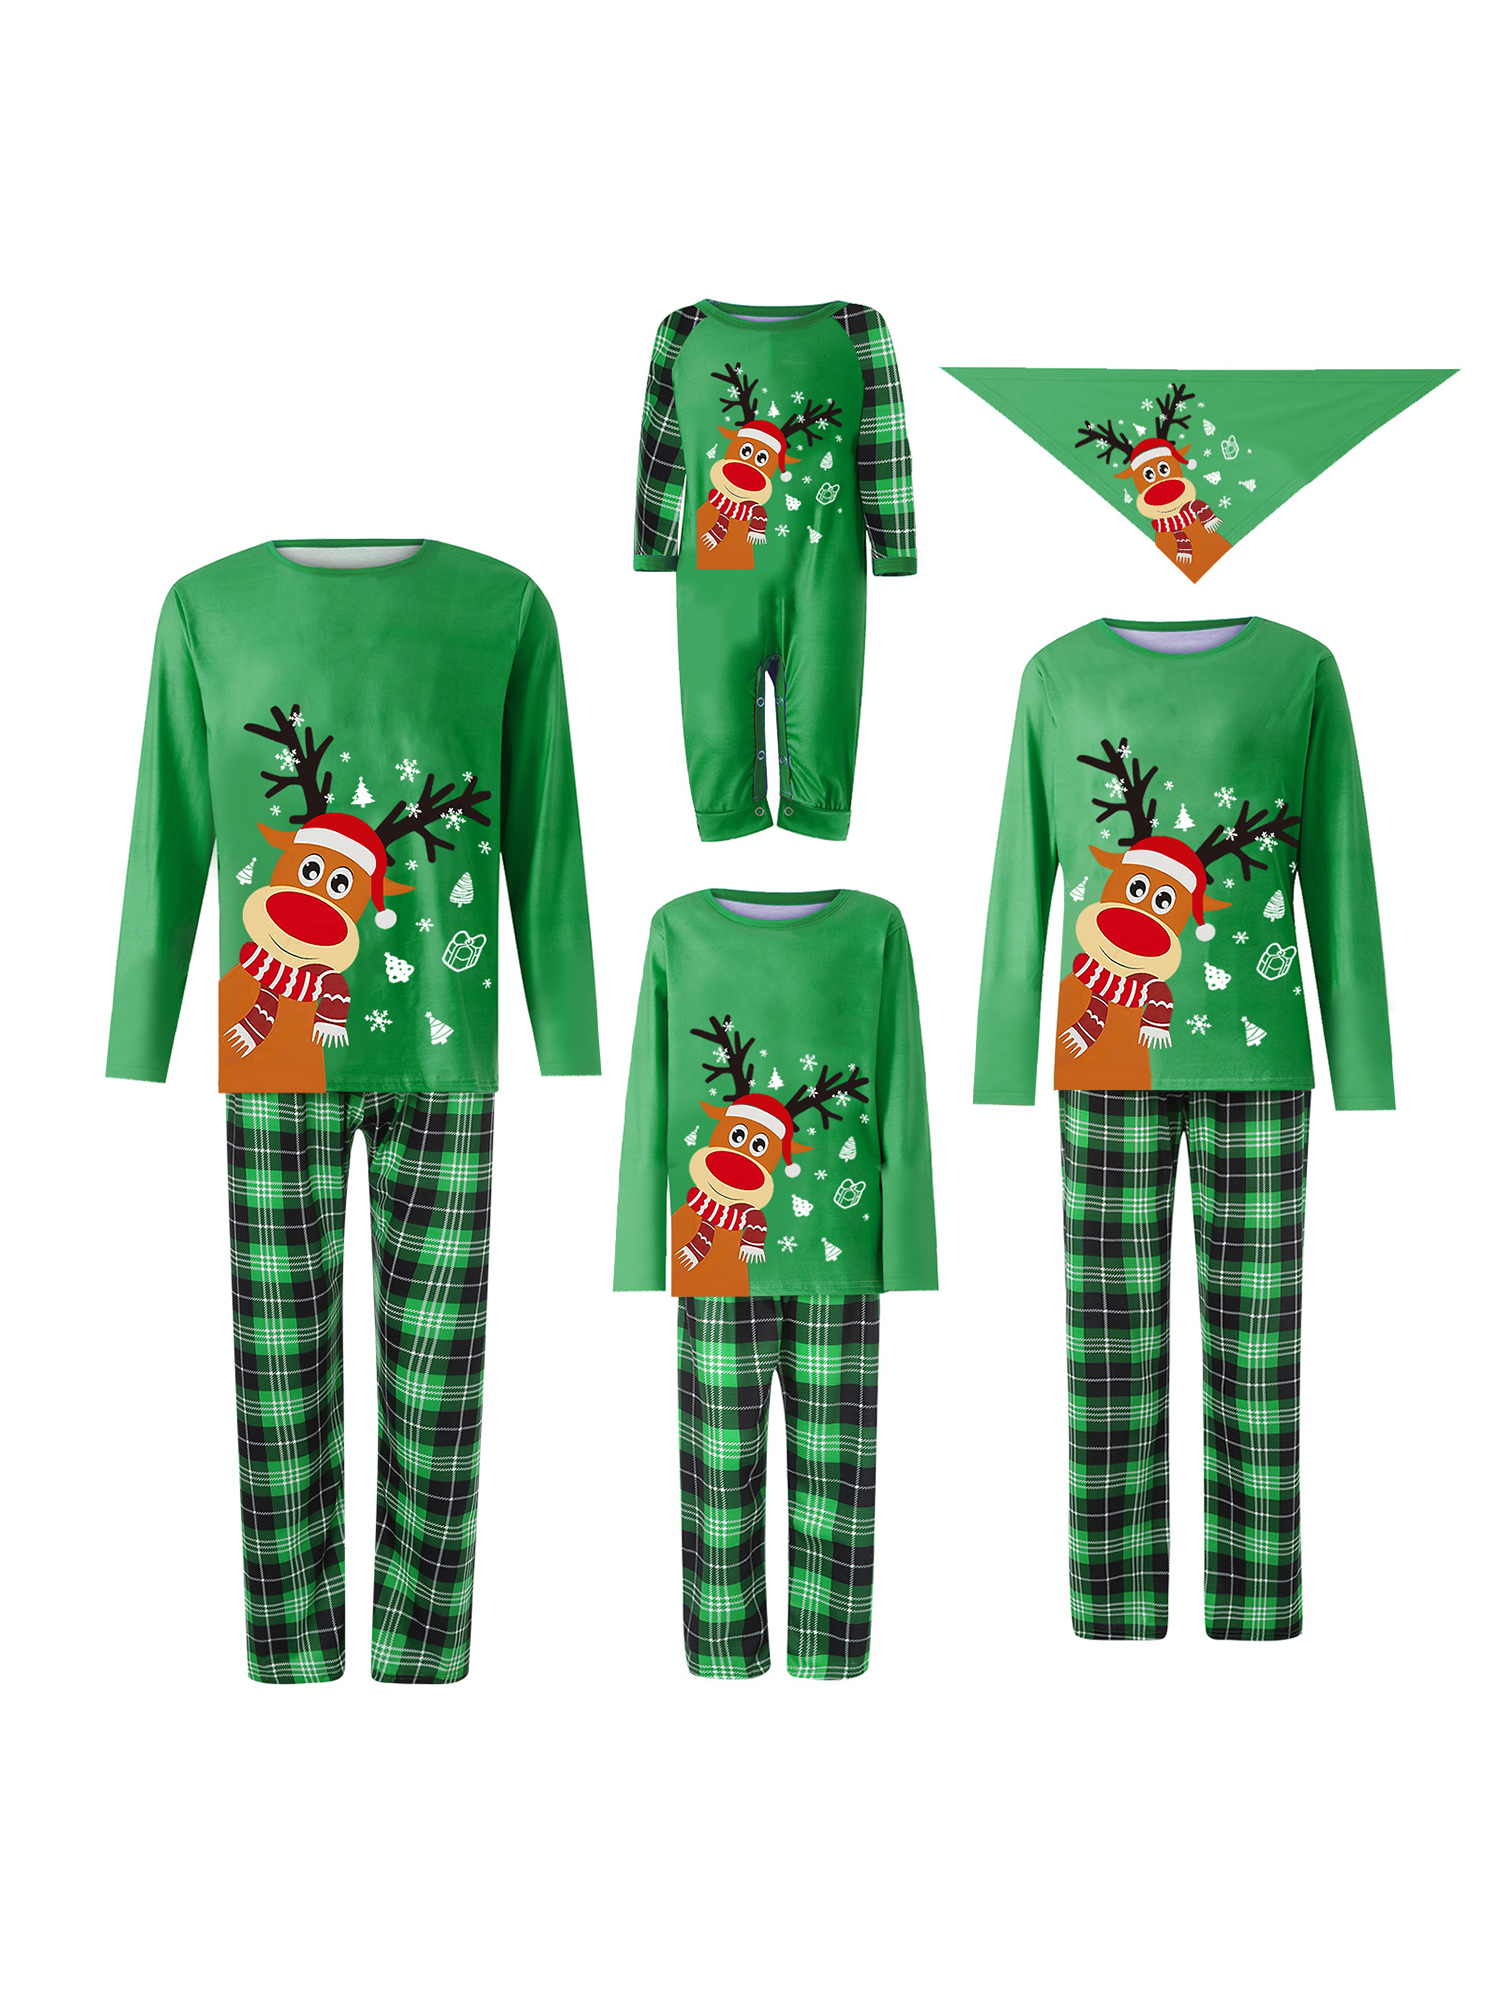 Christmas Family Pajamas Matching Sets Xmas Matching Pjs, Long Sleeve Deer Tops + Plaid Pants Set for Adults, Kid, Baby, Dog - image 1 of 6